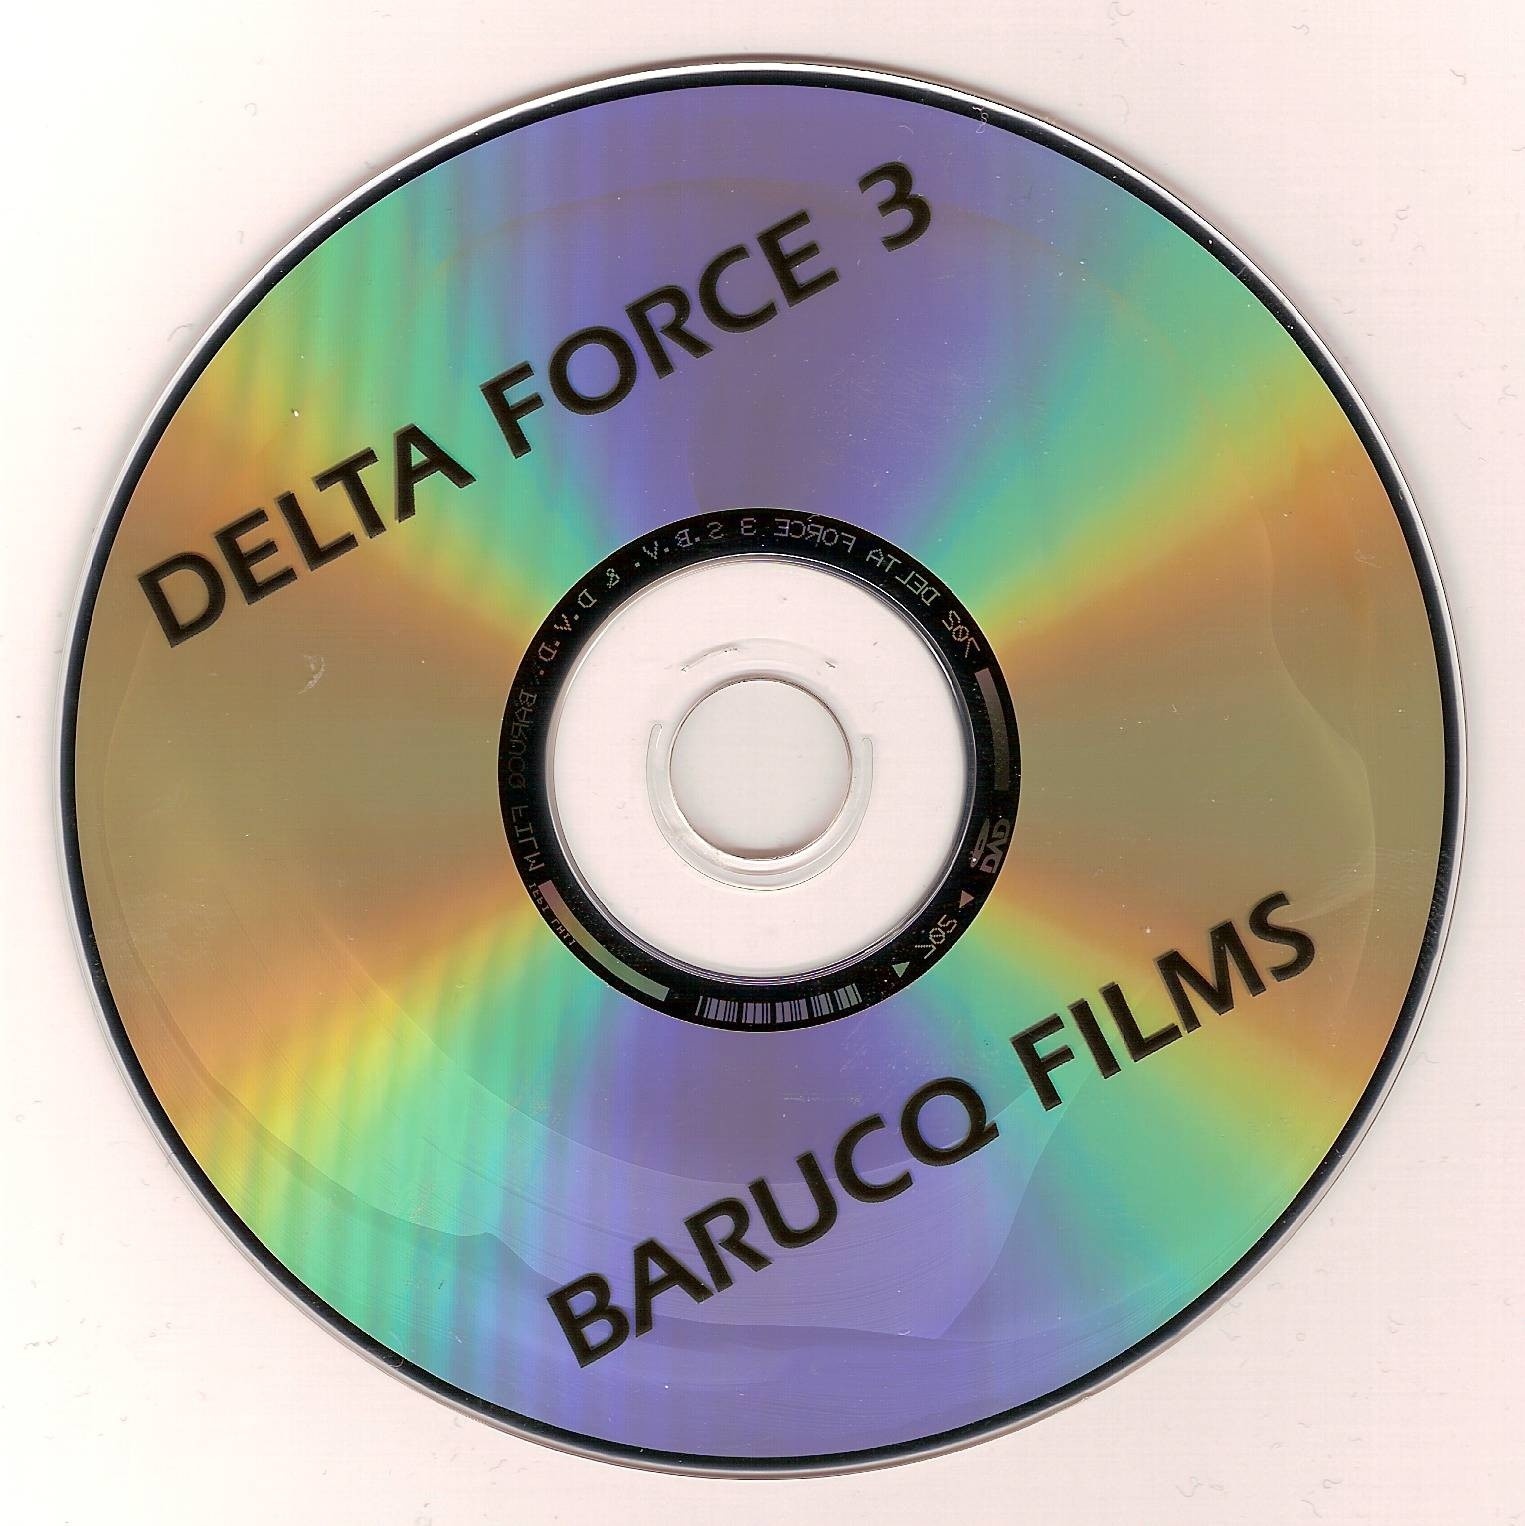 Delta force 3